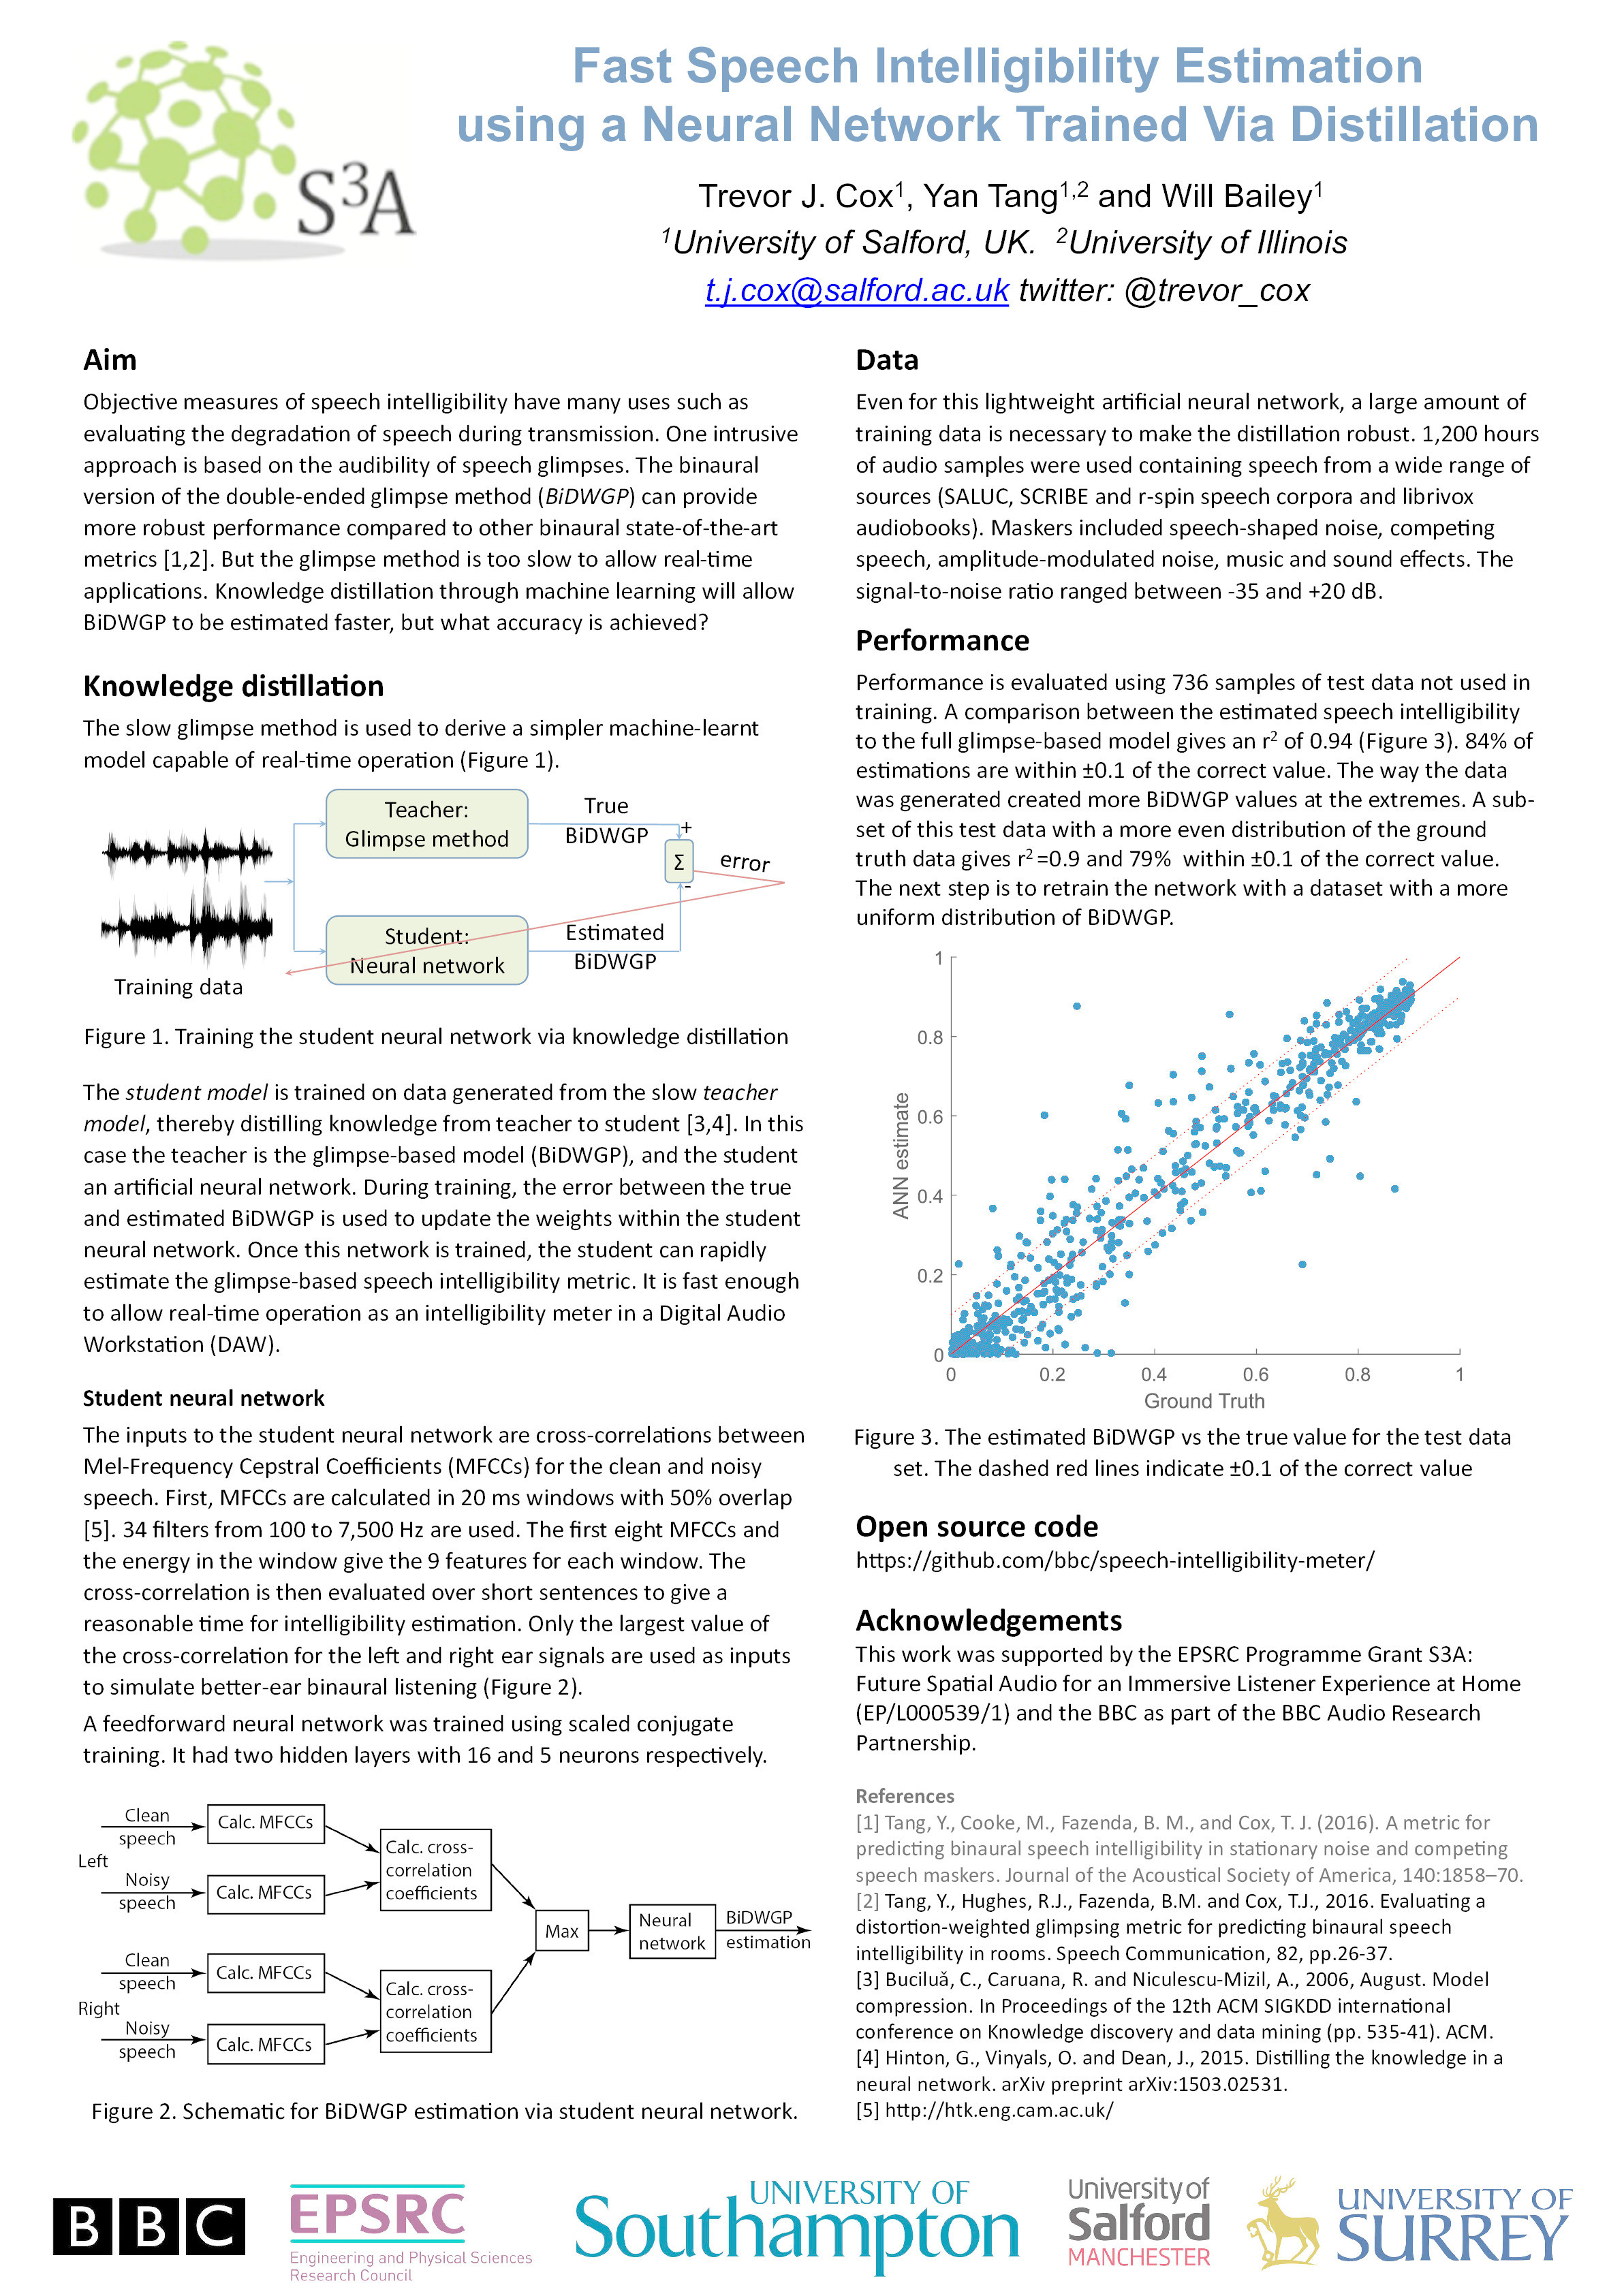 Fast speech intelligibility estimation using a neural network trained via distillation Thumbnail